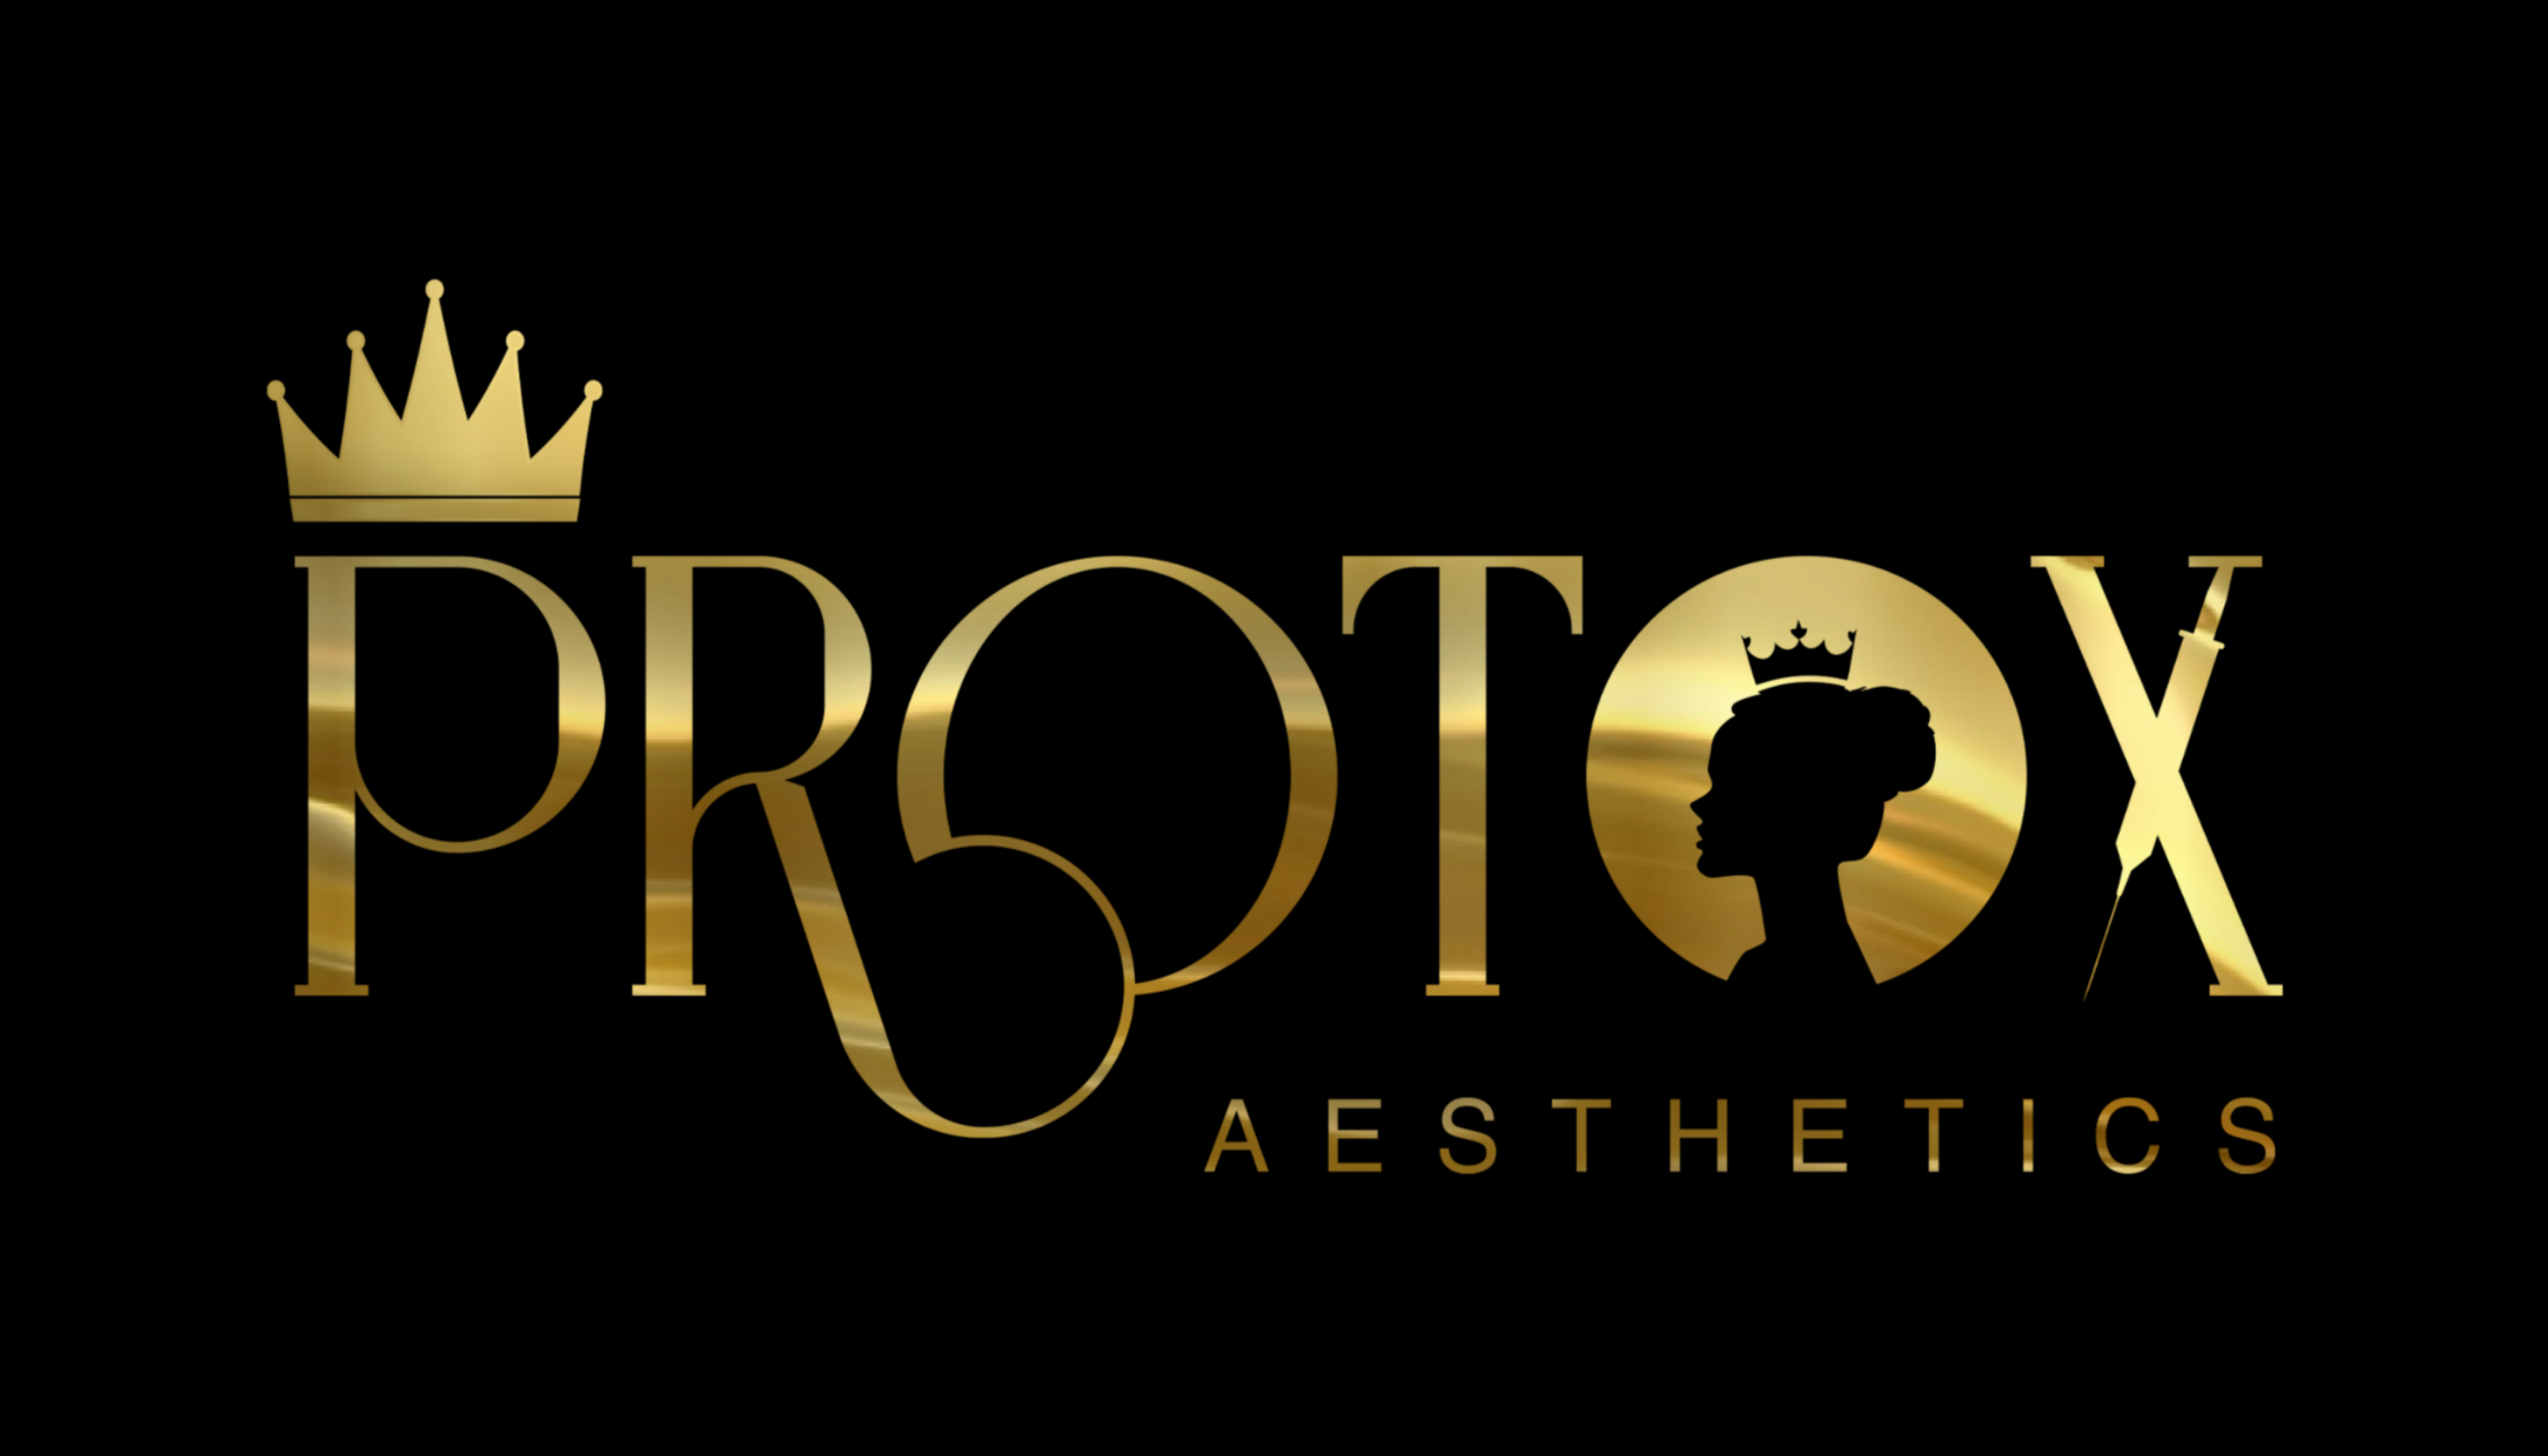 Protox Aesthetics Ltd